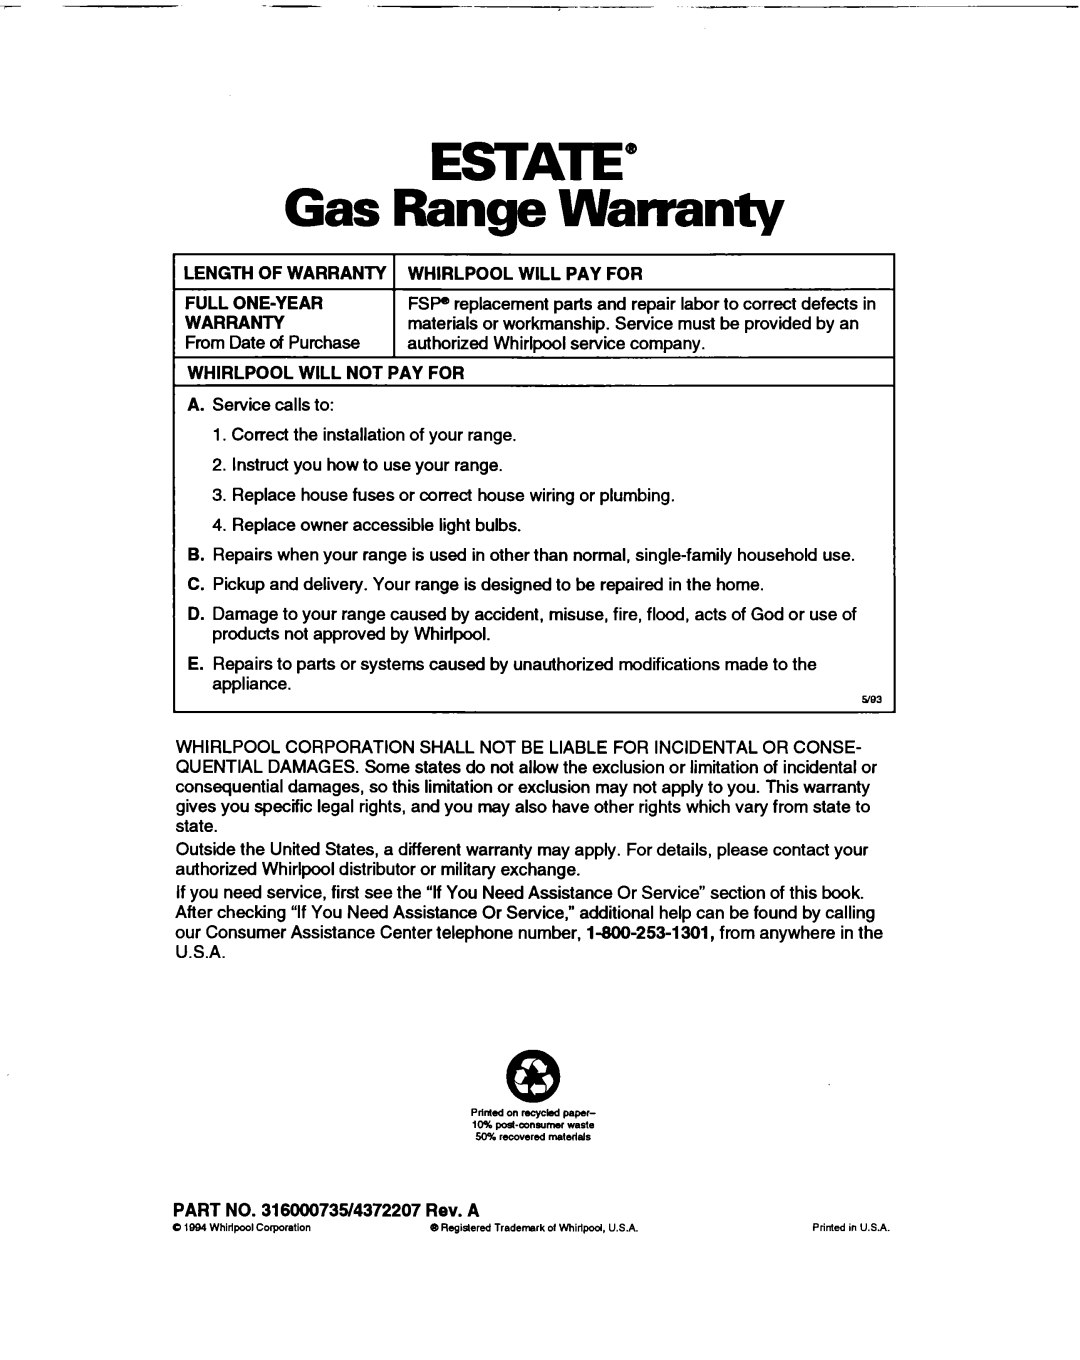 Whirlpool TGR51WO manual ESTATE” Gas Range Warranty, Length Of Warranty Whirlpool Will Pay For, Full One-Year 